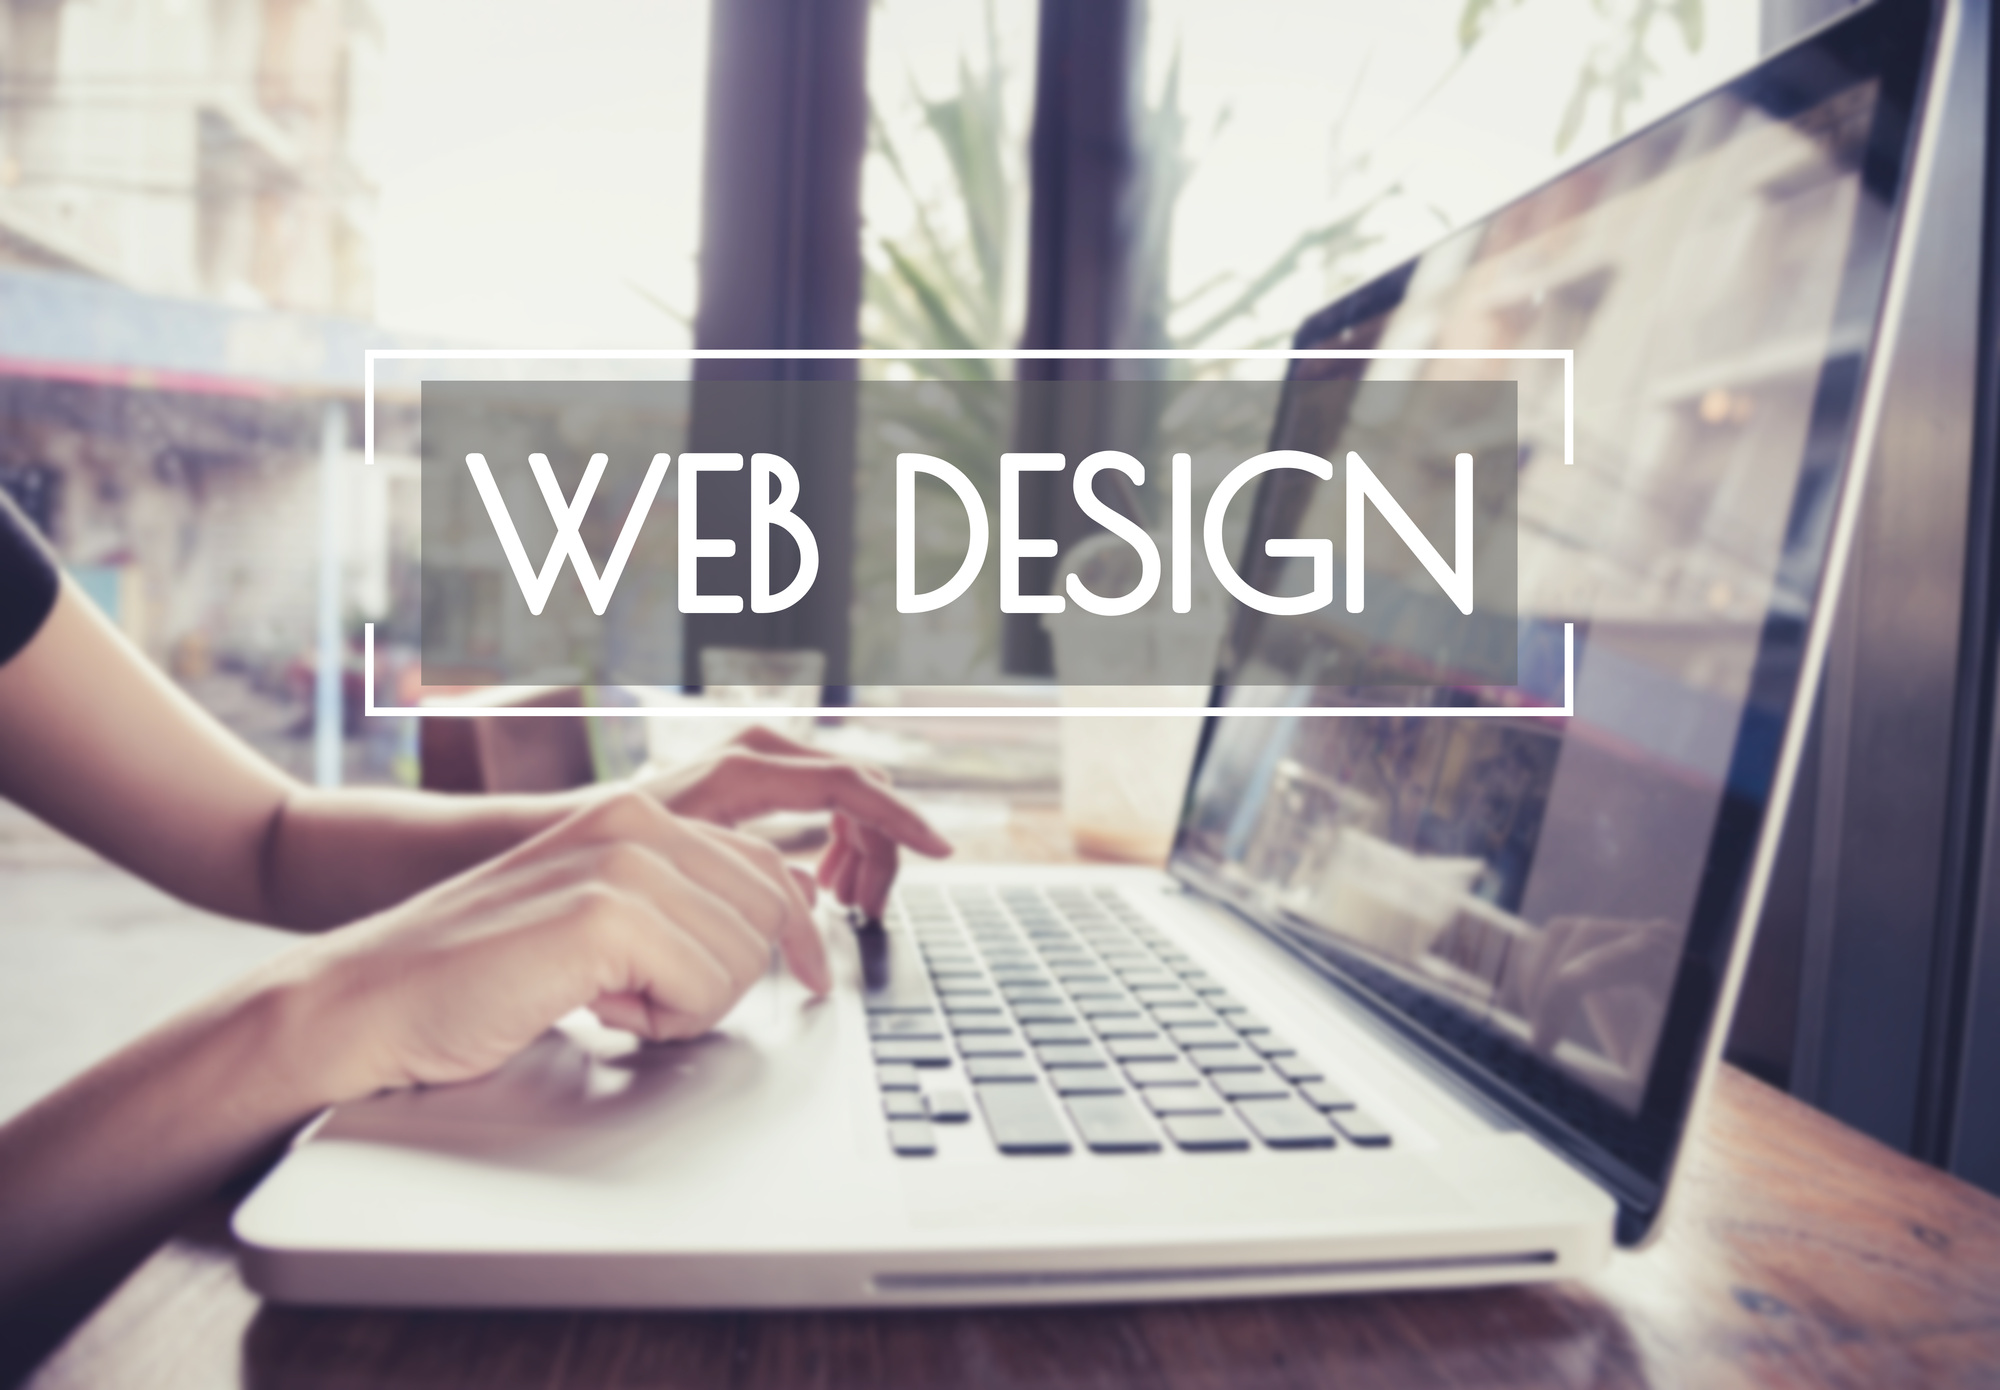 Hire a Professional Web Design Service